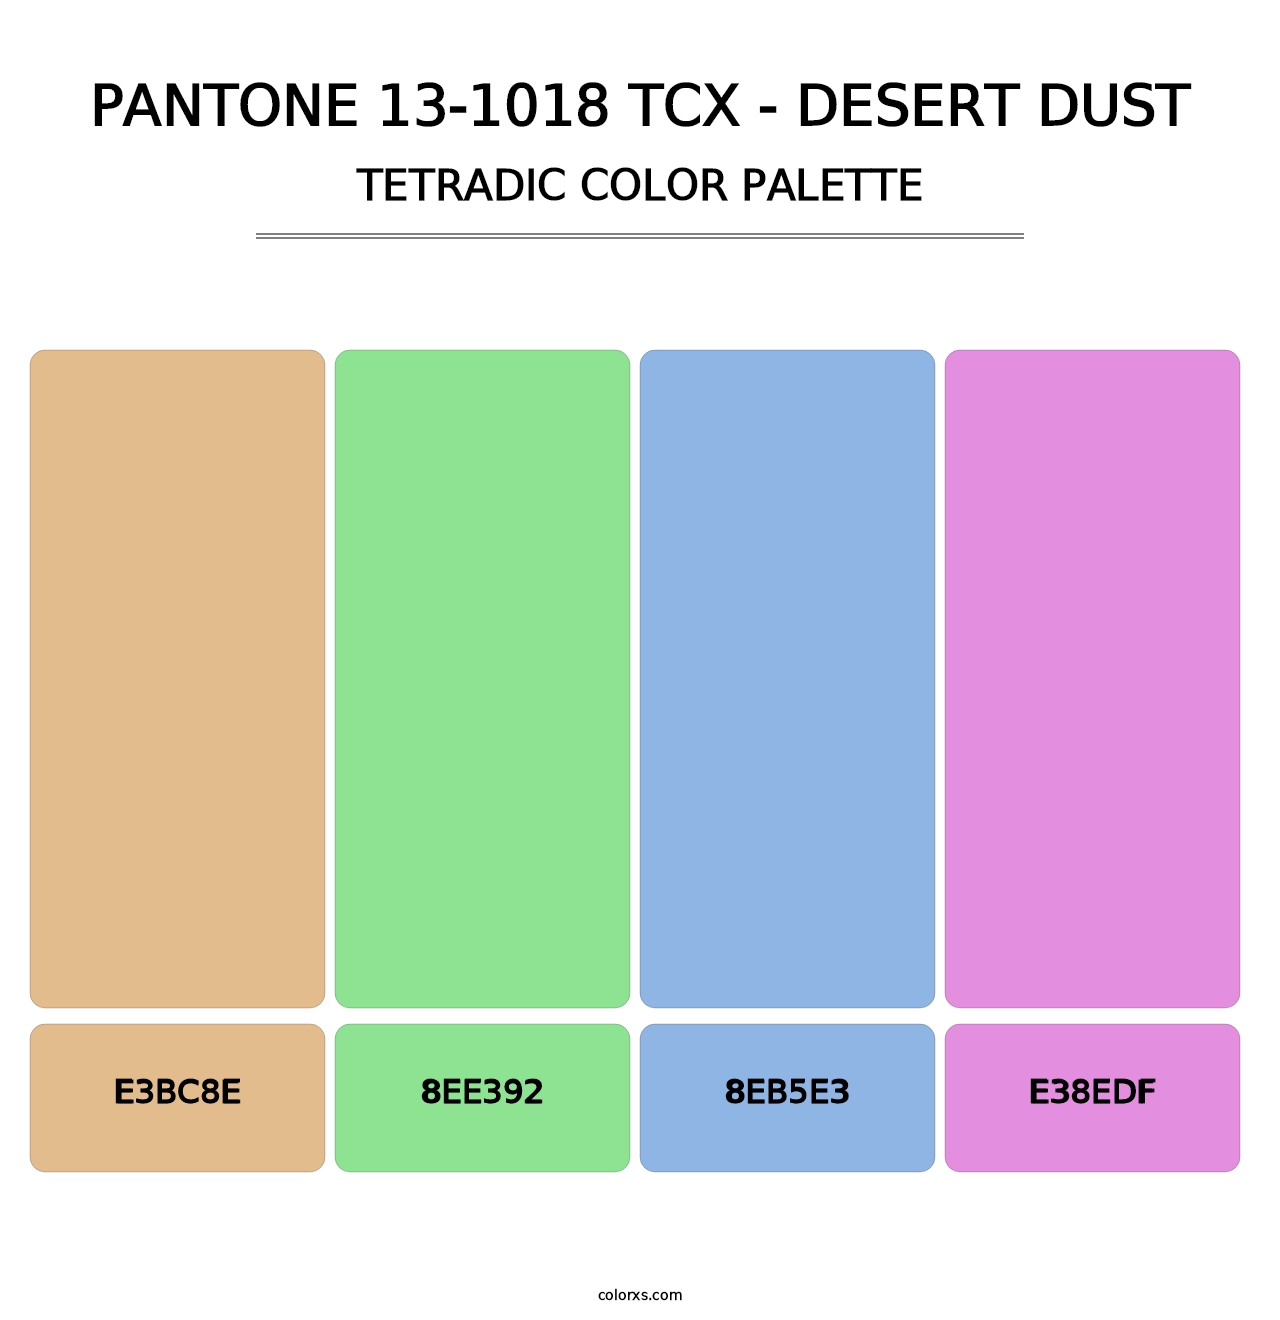 PANTONE 13-1018 TCX - Desert Dust - Tetradic Color Palette